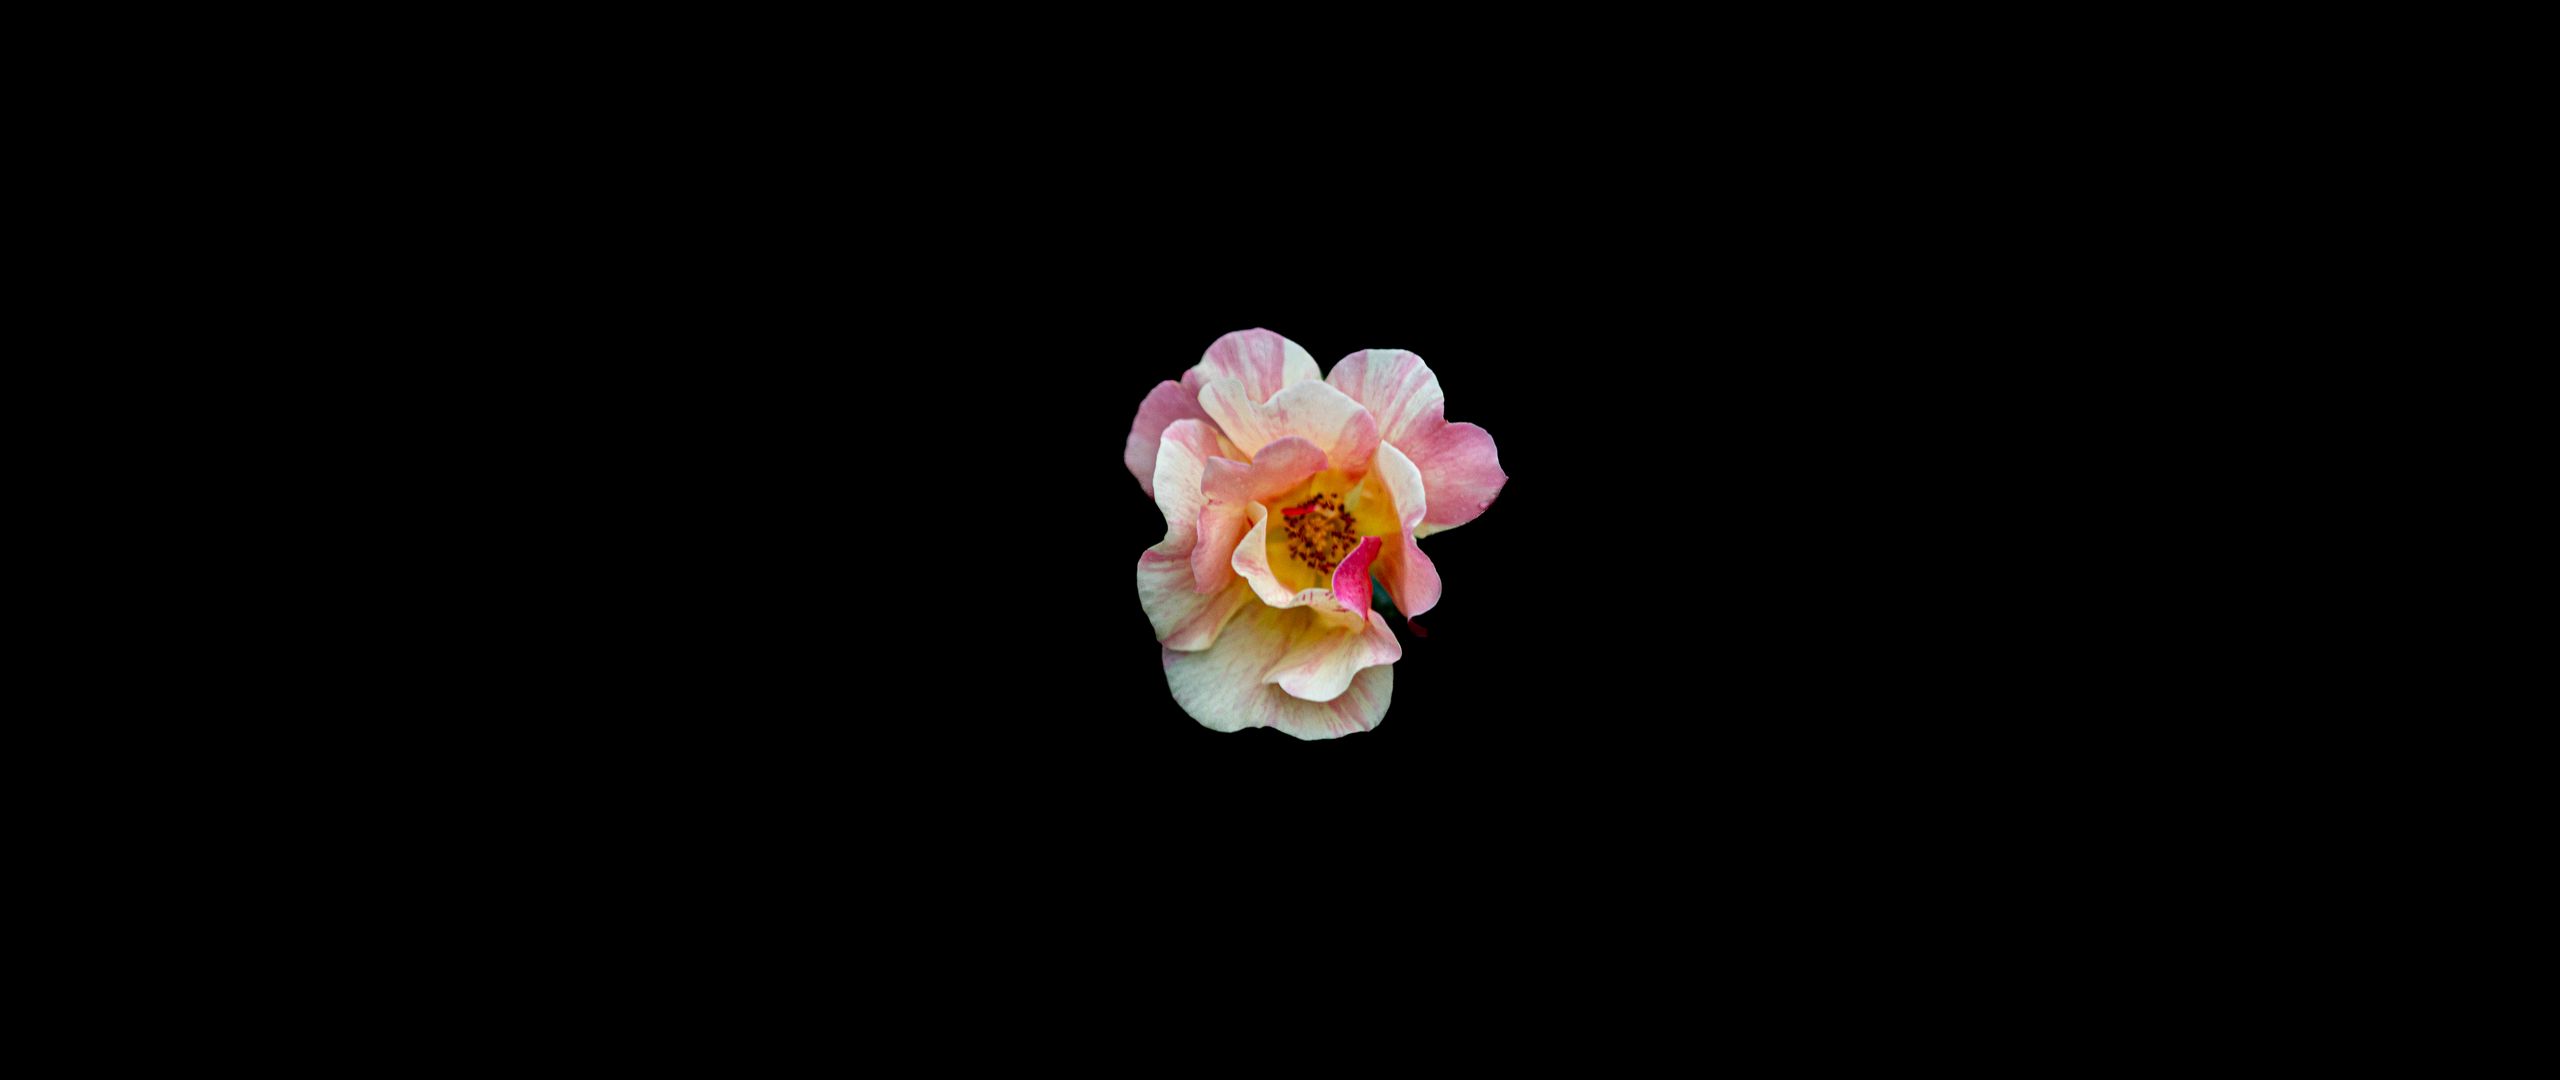 Download wallpaper 2560x1080 flower, minimalism, black background dual ...